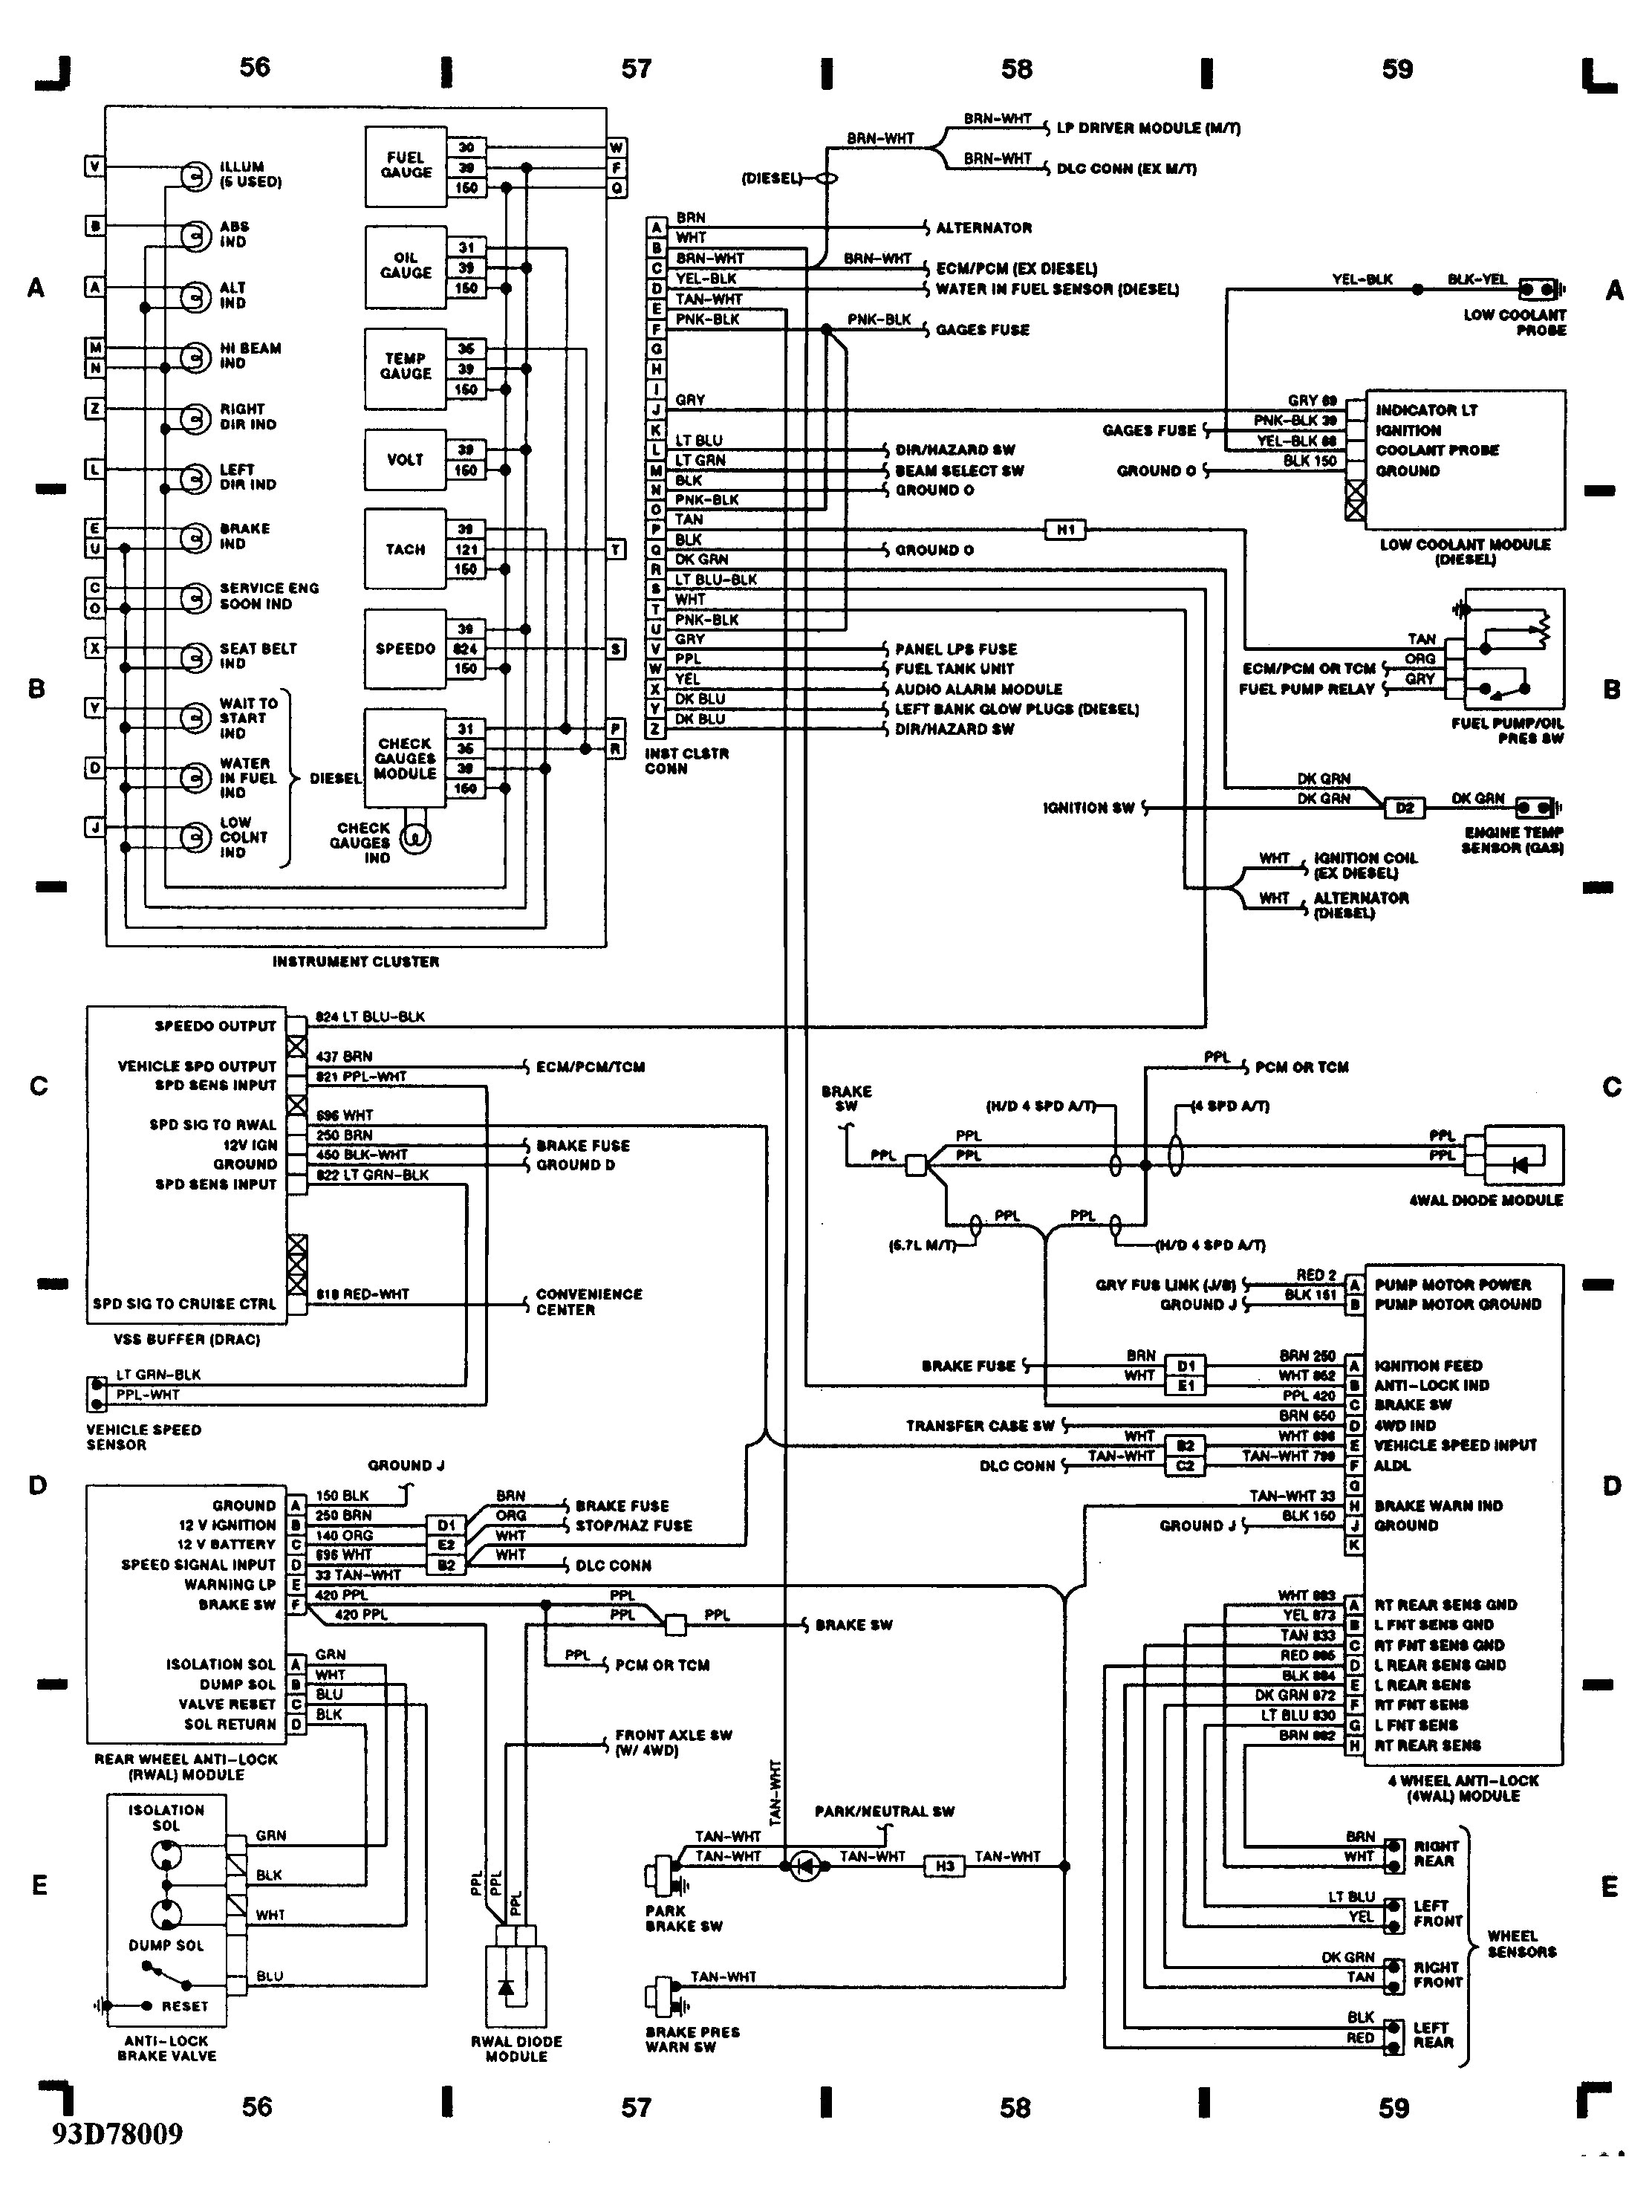 300zx wiring harness diagram on 1990 chevy lumina engine diagram 1990 nissan 300zx wiring harness diagram on 1990 chevy lumina engine